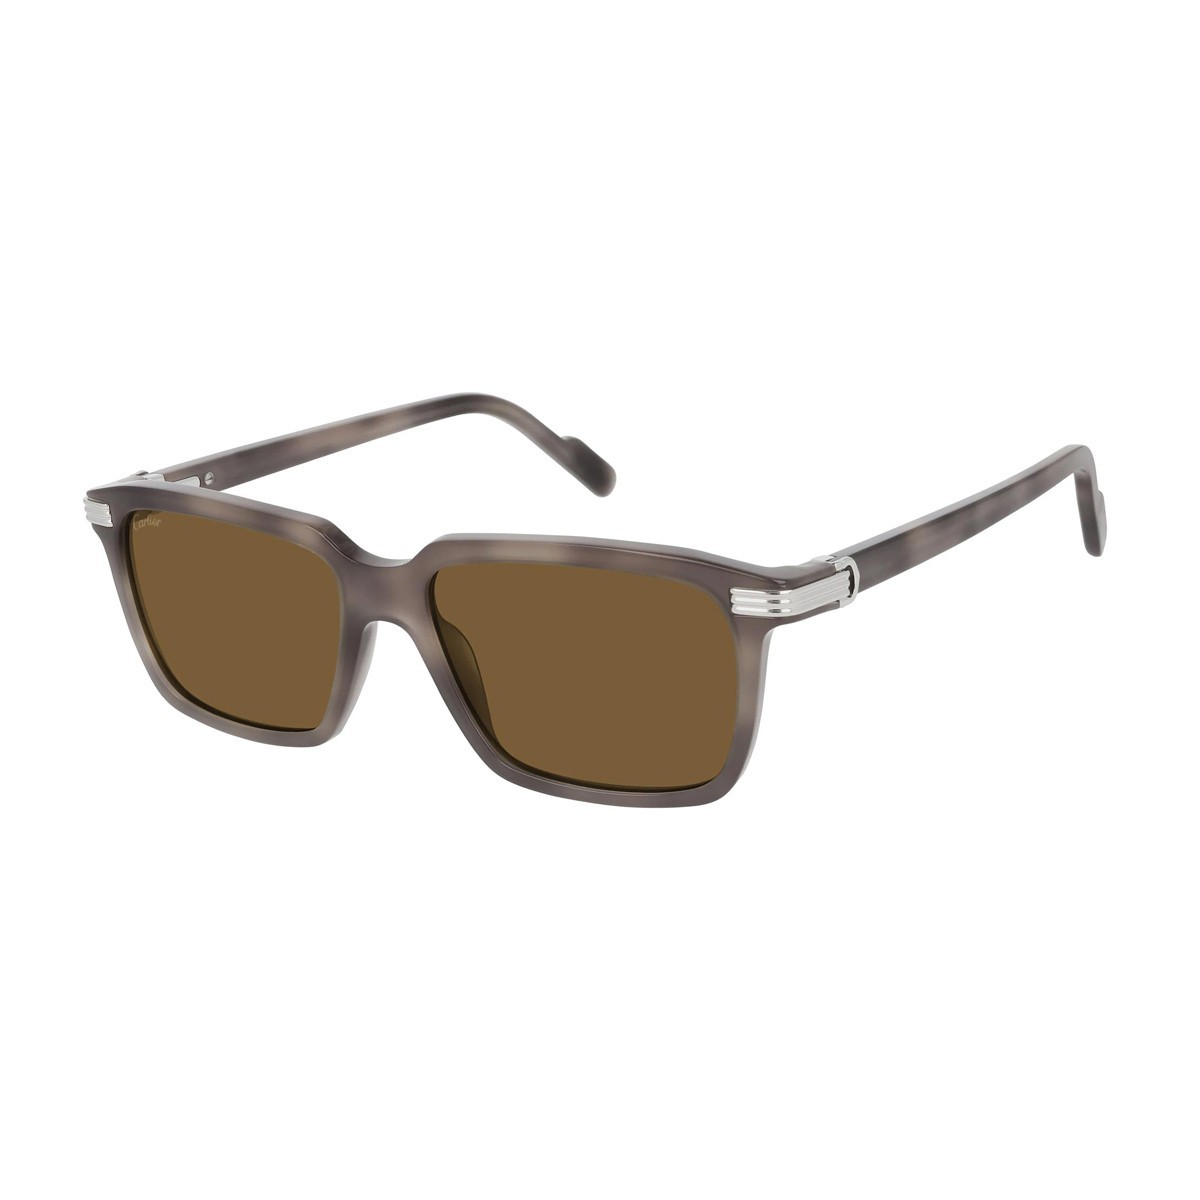 Cartier CT0220S | Men's sunglasses